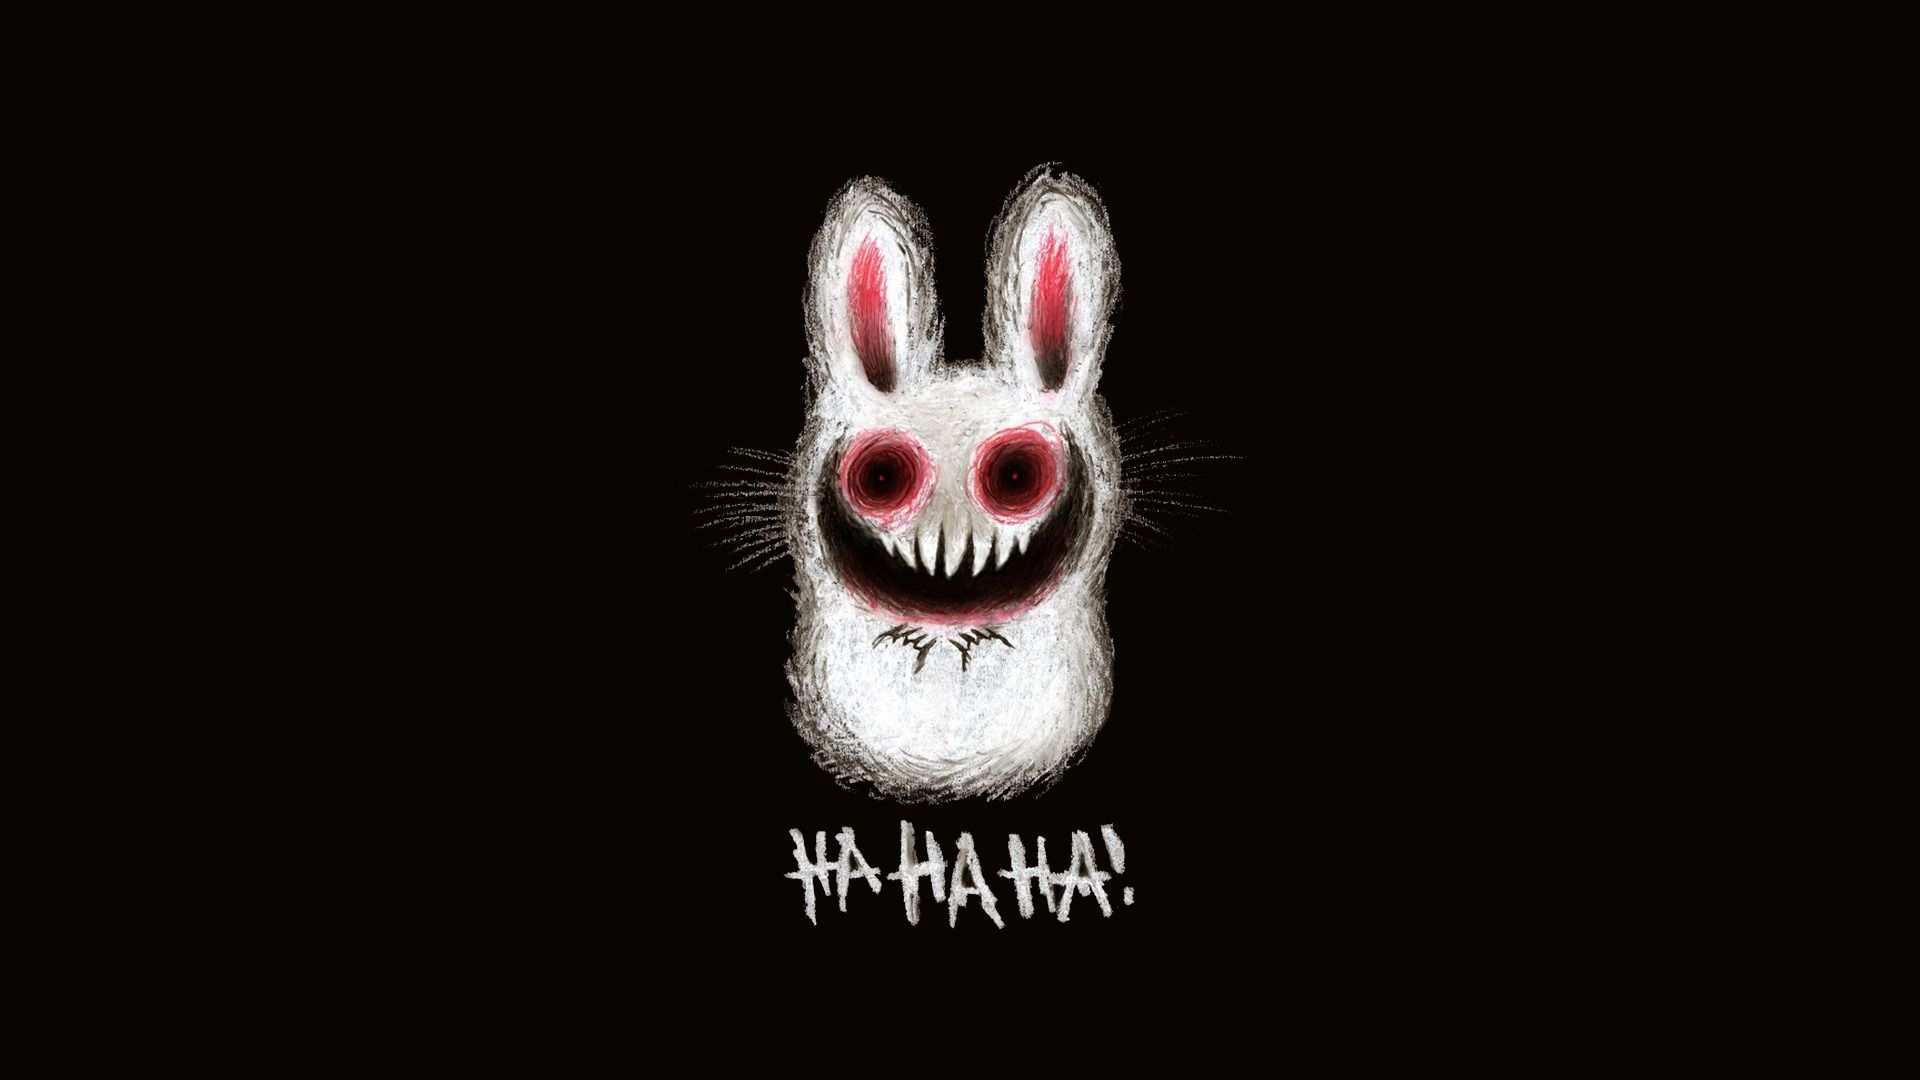 Creepy bunny wallpaper for your PC, mobile phone, iPad, iPhone. - Creepy